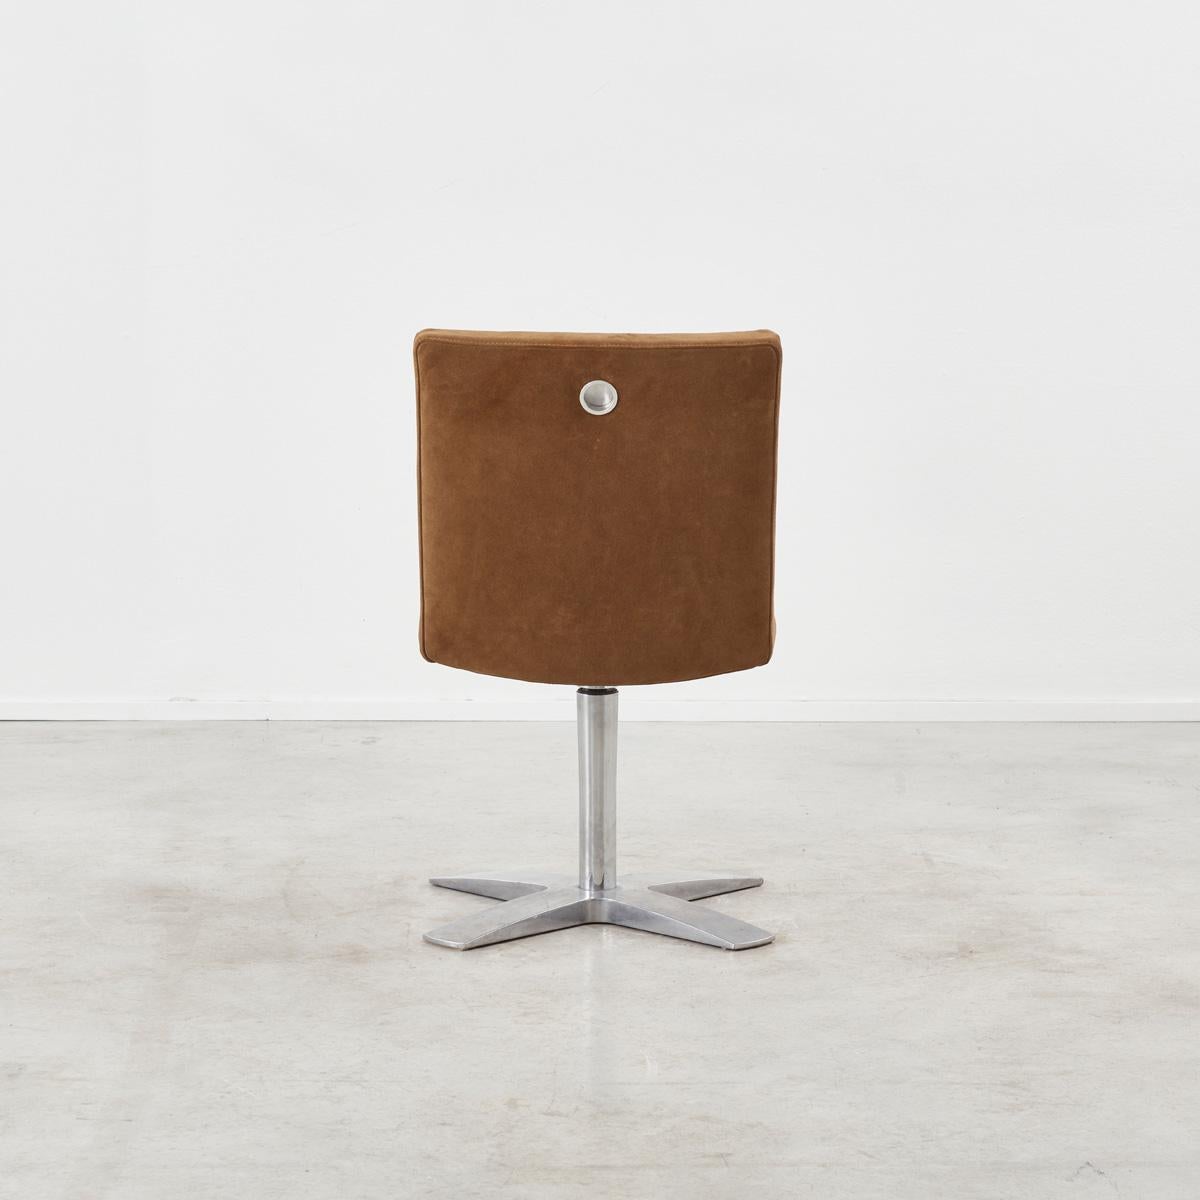 Finnish Harri Korhonen Suede Desk Chair for Inno, Finland 2000s For Sale